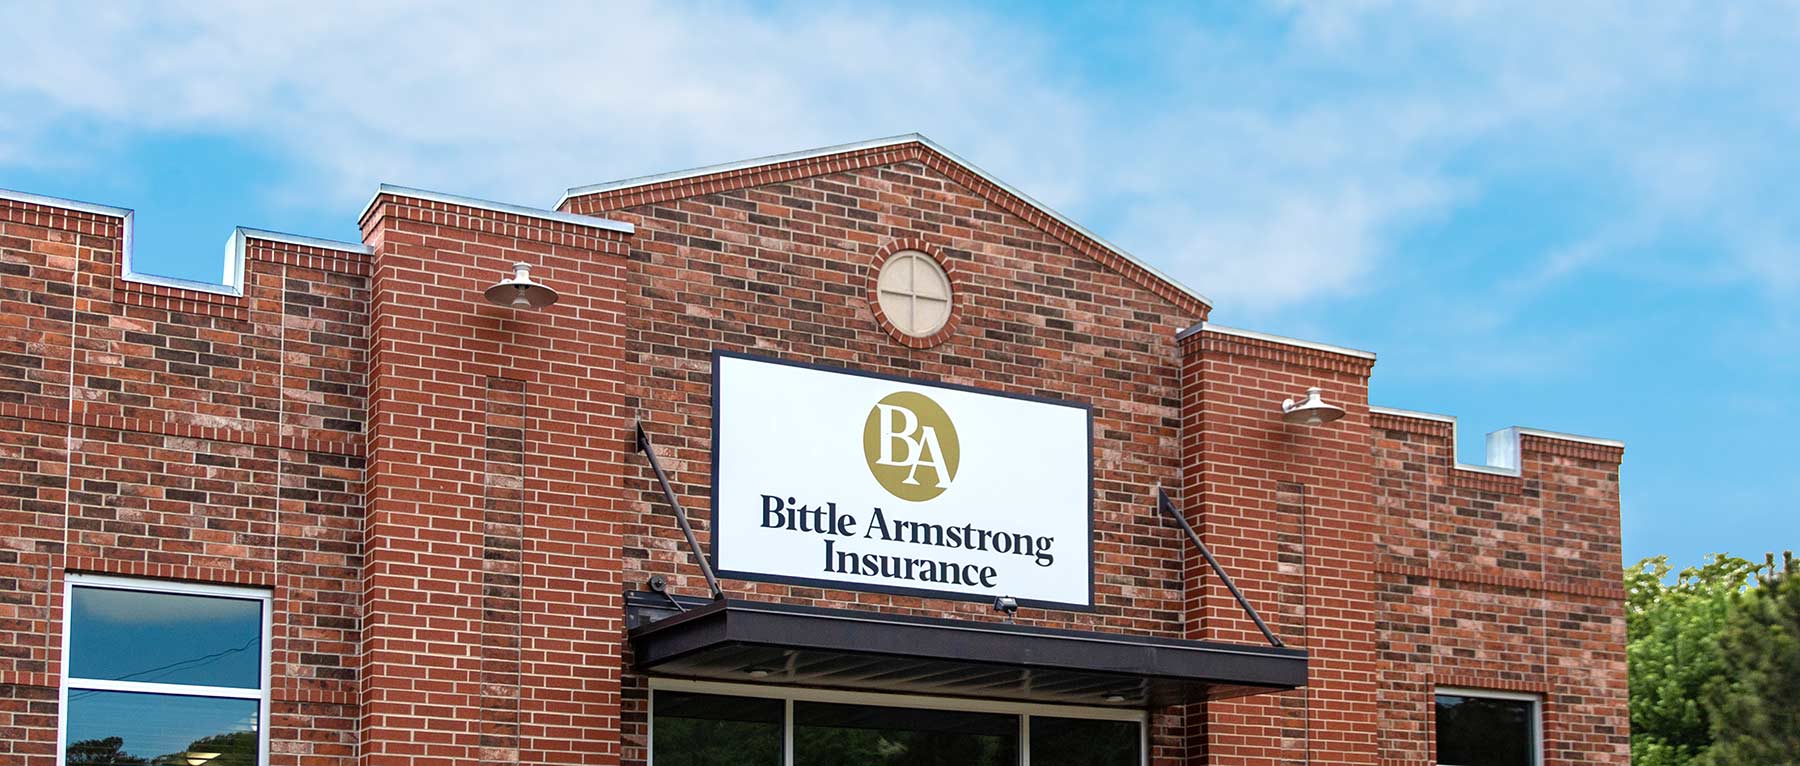 bittle armstrong insurance northwest arkansas